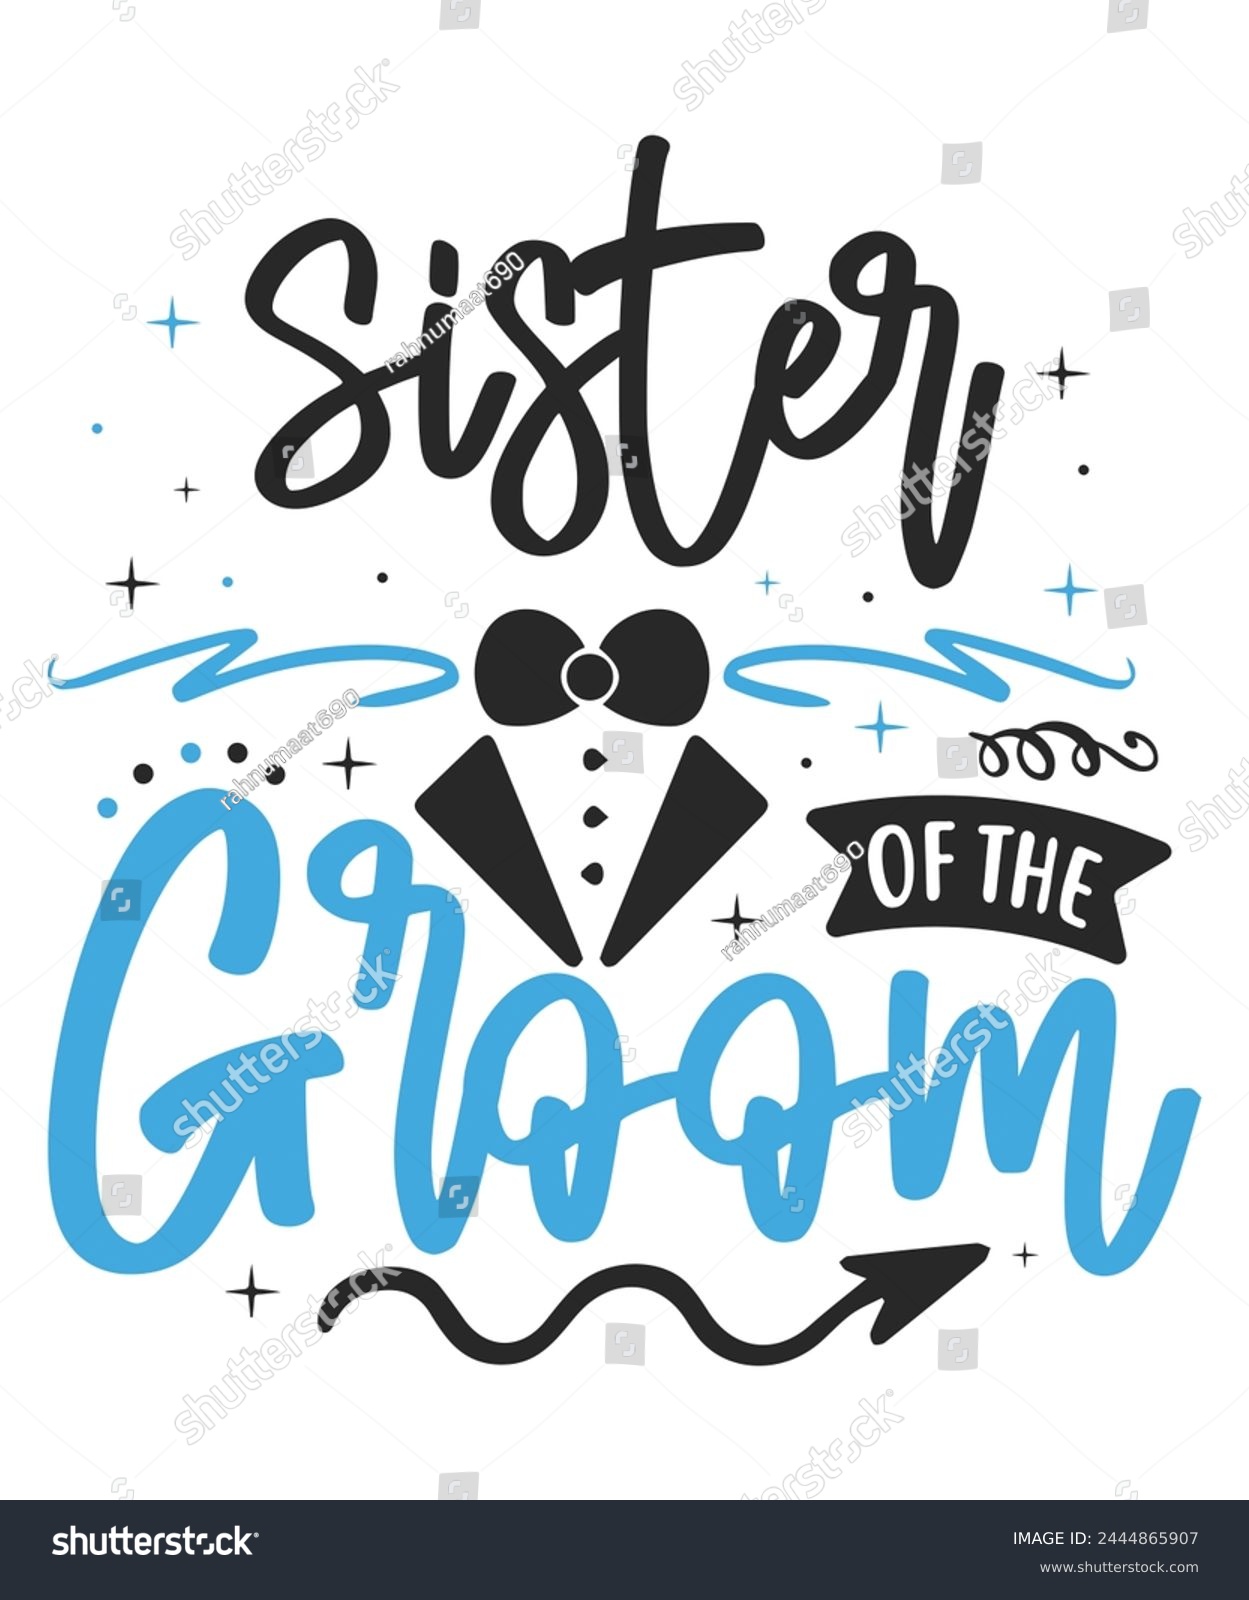 SVG of Sister of the groom wedding bride groom svg